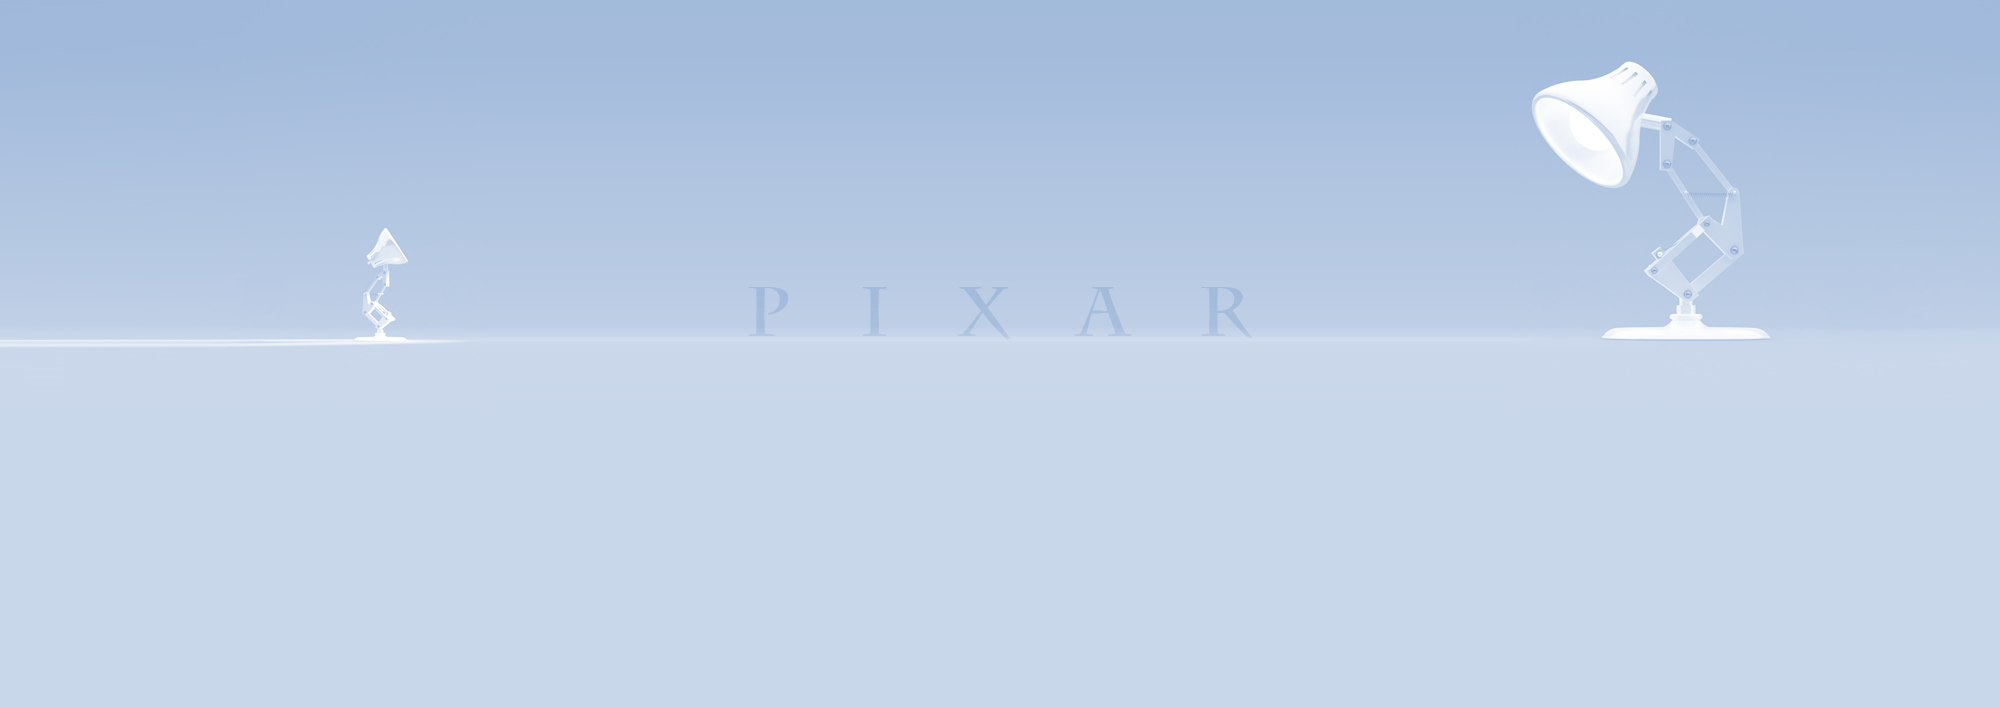 Pixar Wiki - Wikia